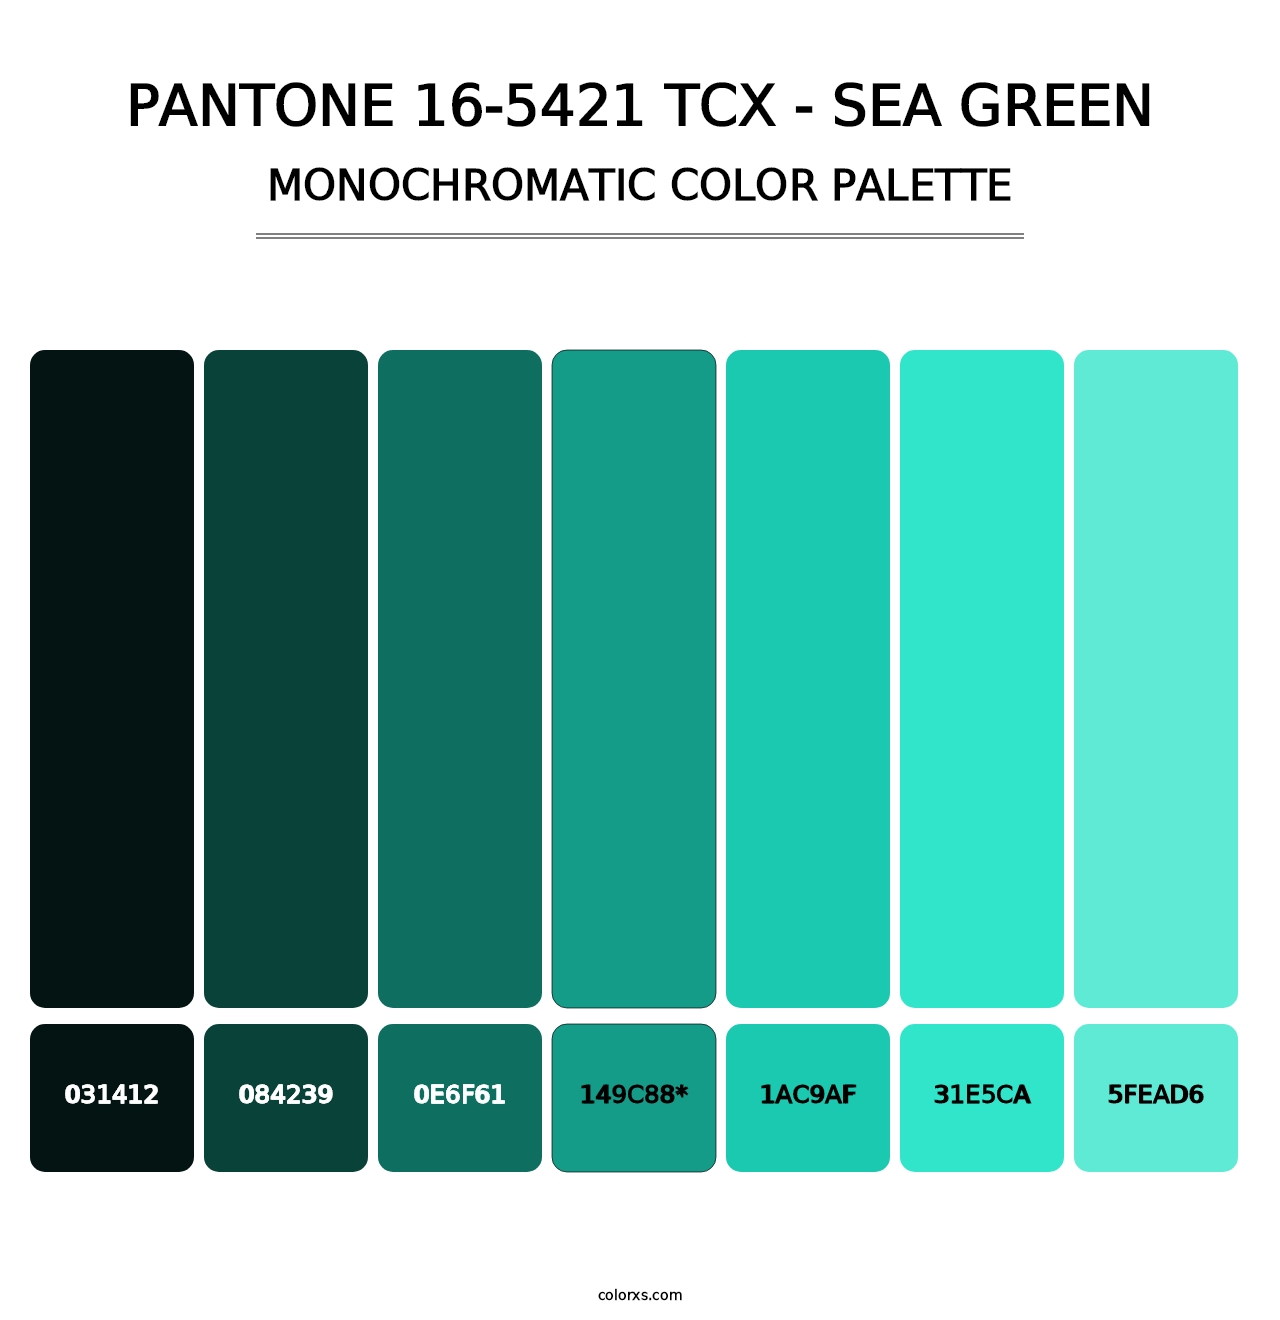 PANTONE 16-5421 TCX - Sea Green - Monochromatic Color Palette